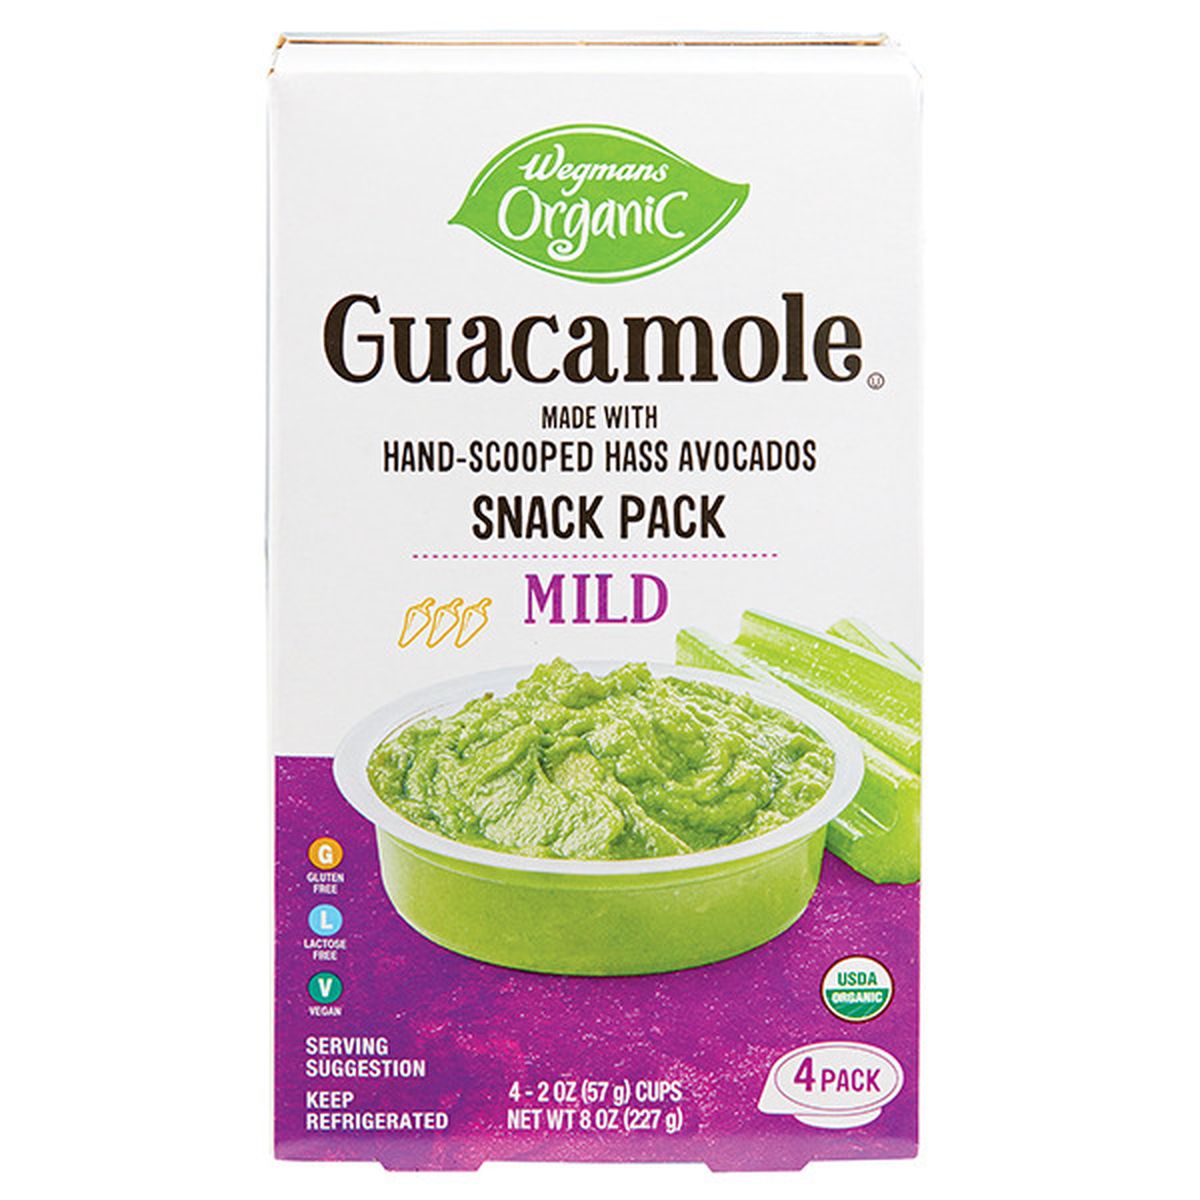 Calories in Wegmans Organic Guacamole, Snack Pack